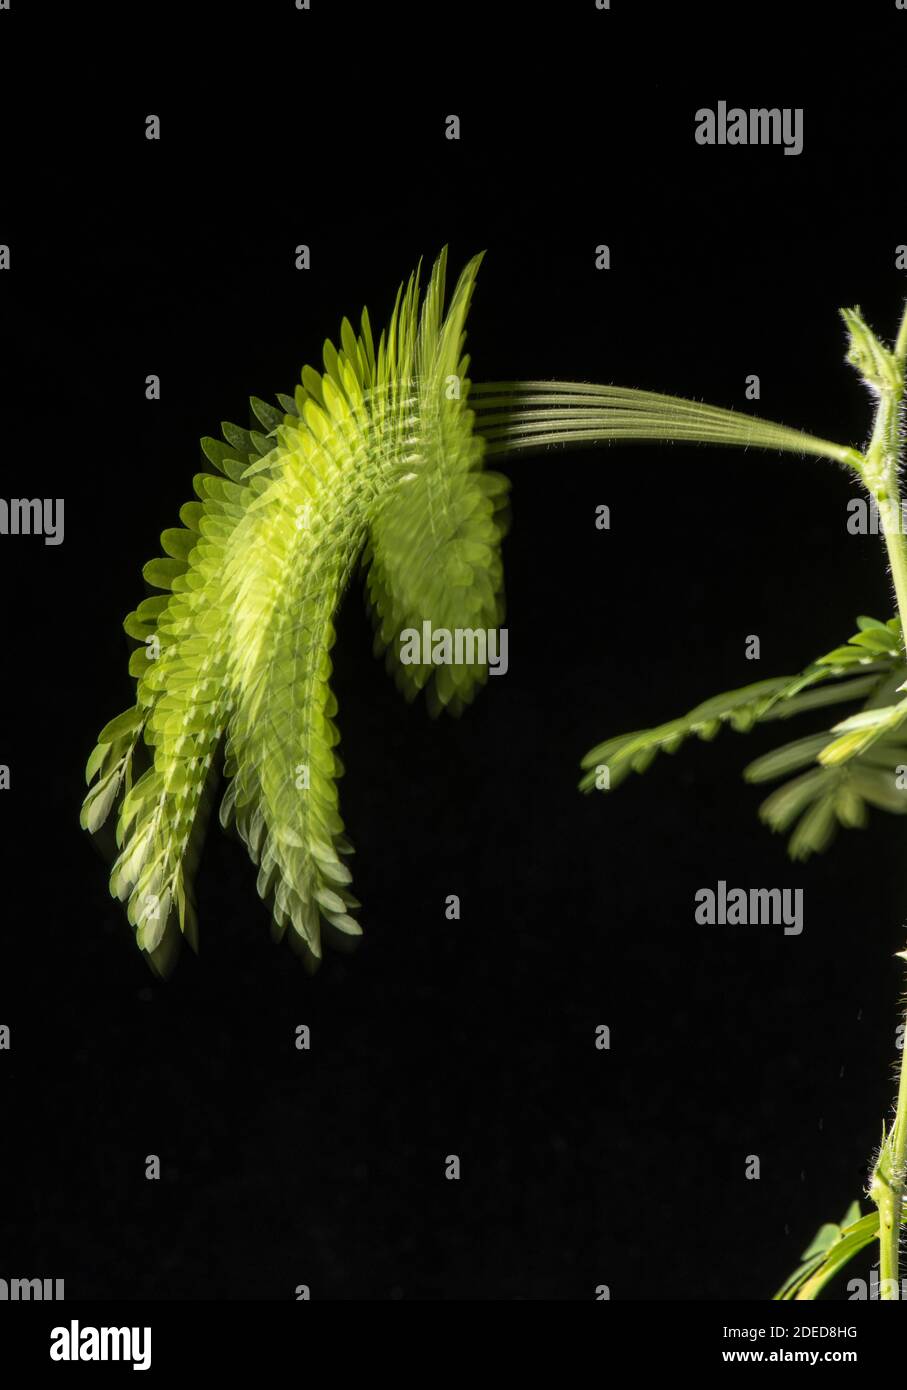 Sensitive Plant: Mimosa pudica. Stroboscopic image showing collapse of stem following stimulation. Stock Photo